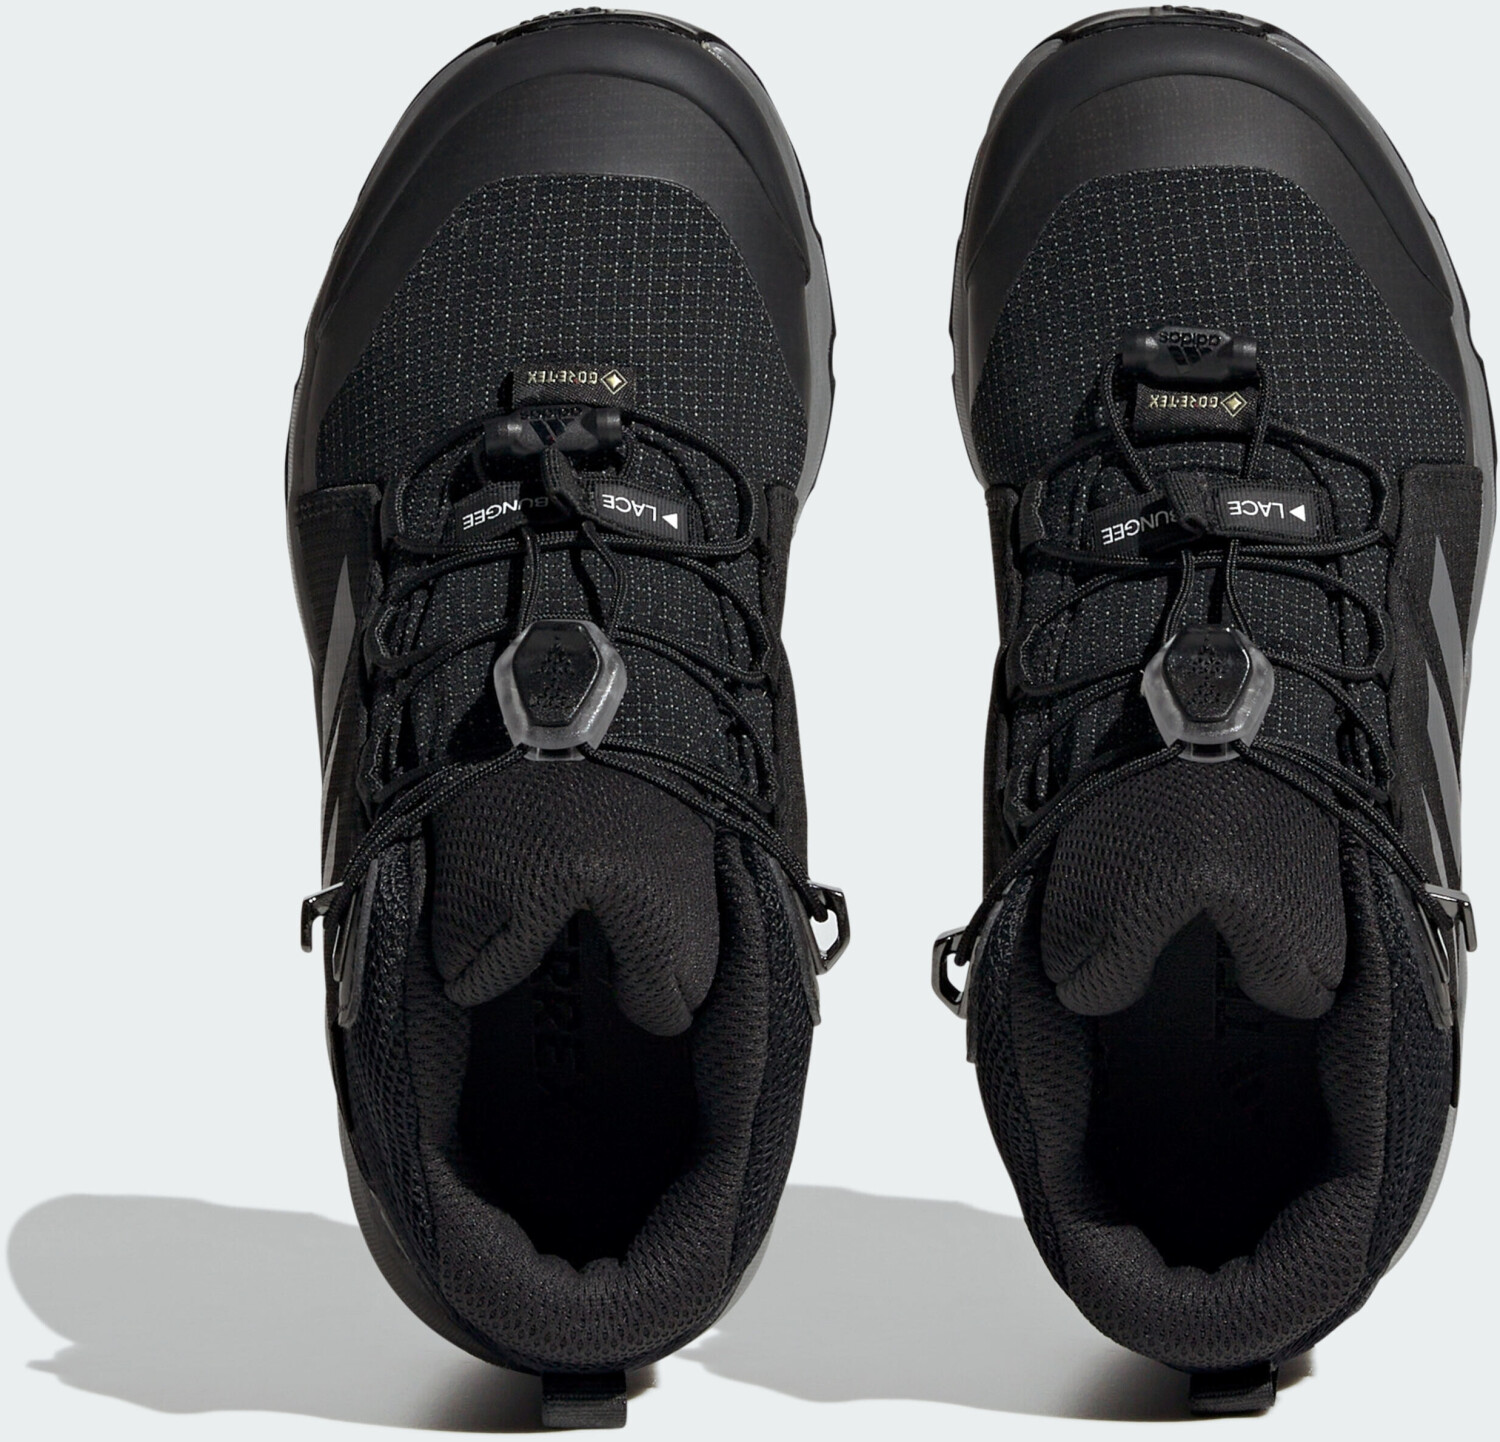 Adidas Organizer Mid 65,89 bei | black black/grey core Preisvergleich € three/core GTX Kids ab